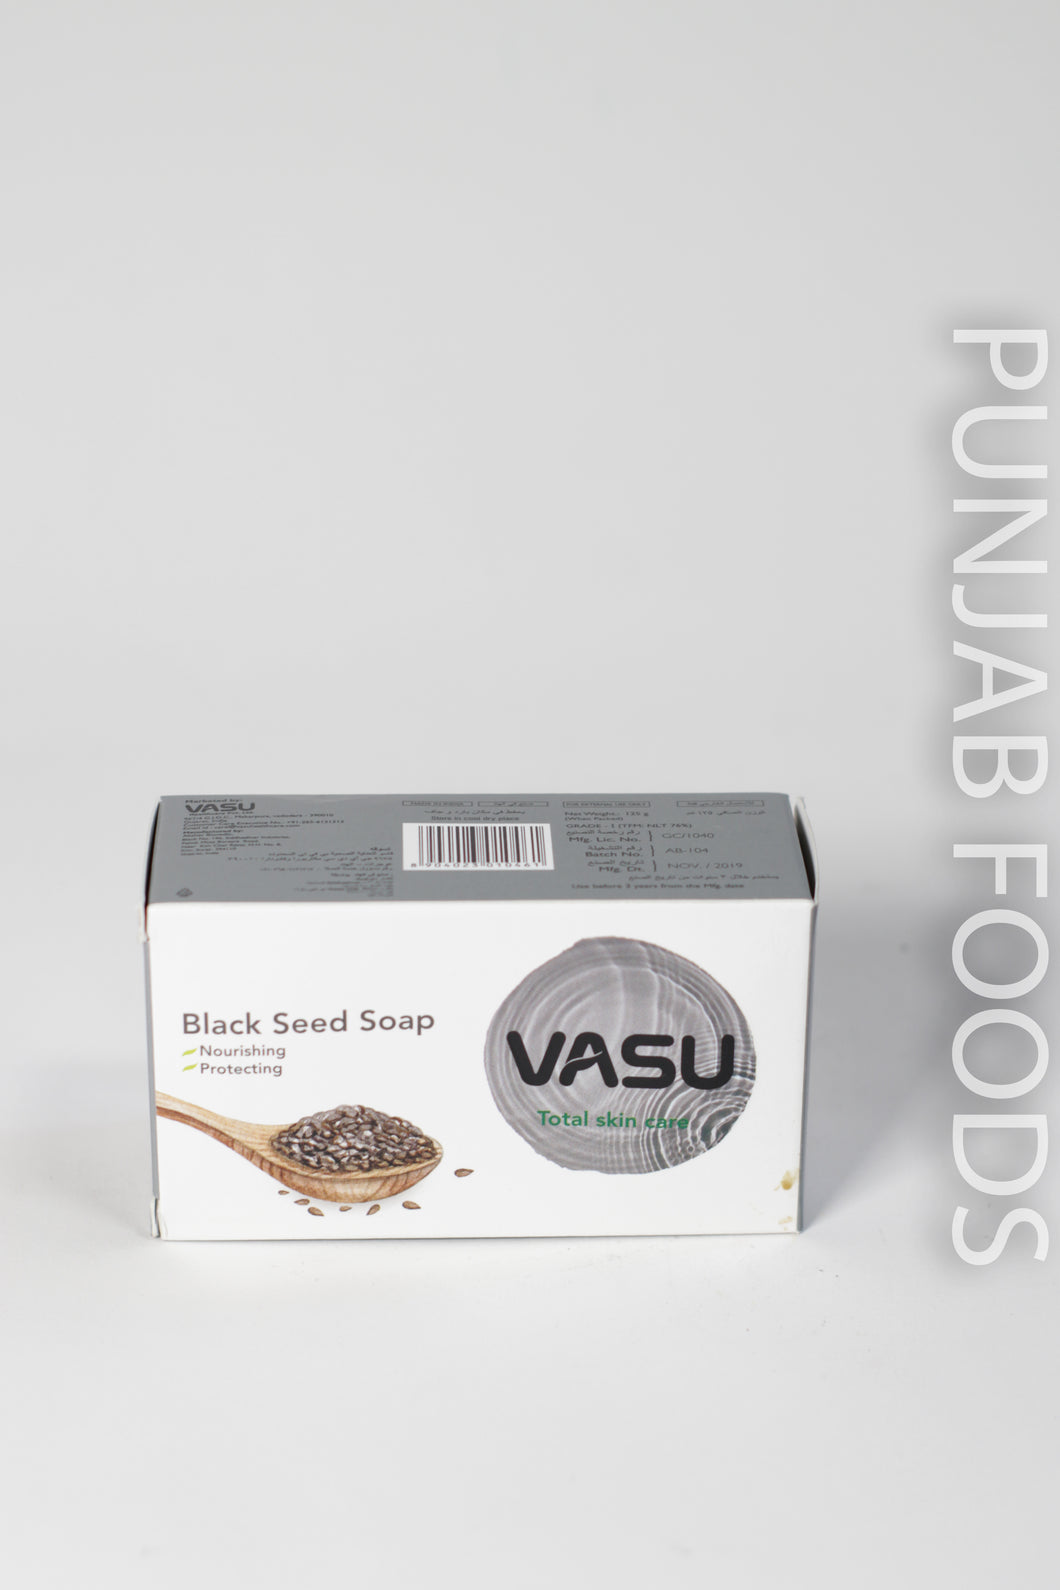 Vasu Black Seed Soap